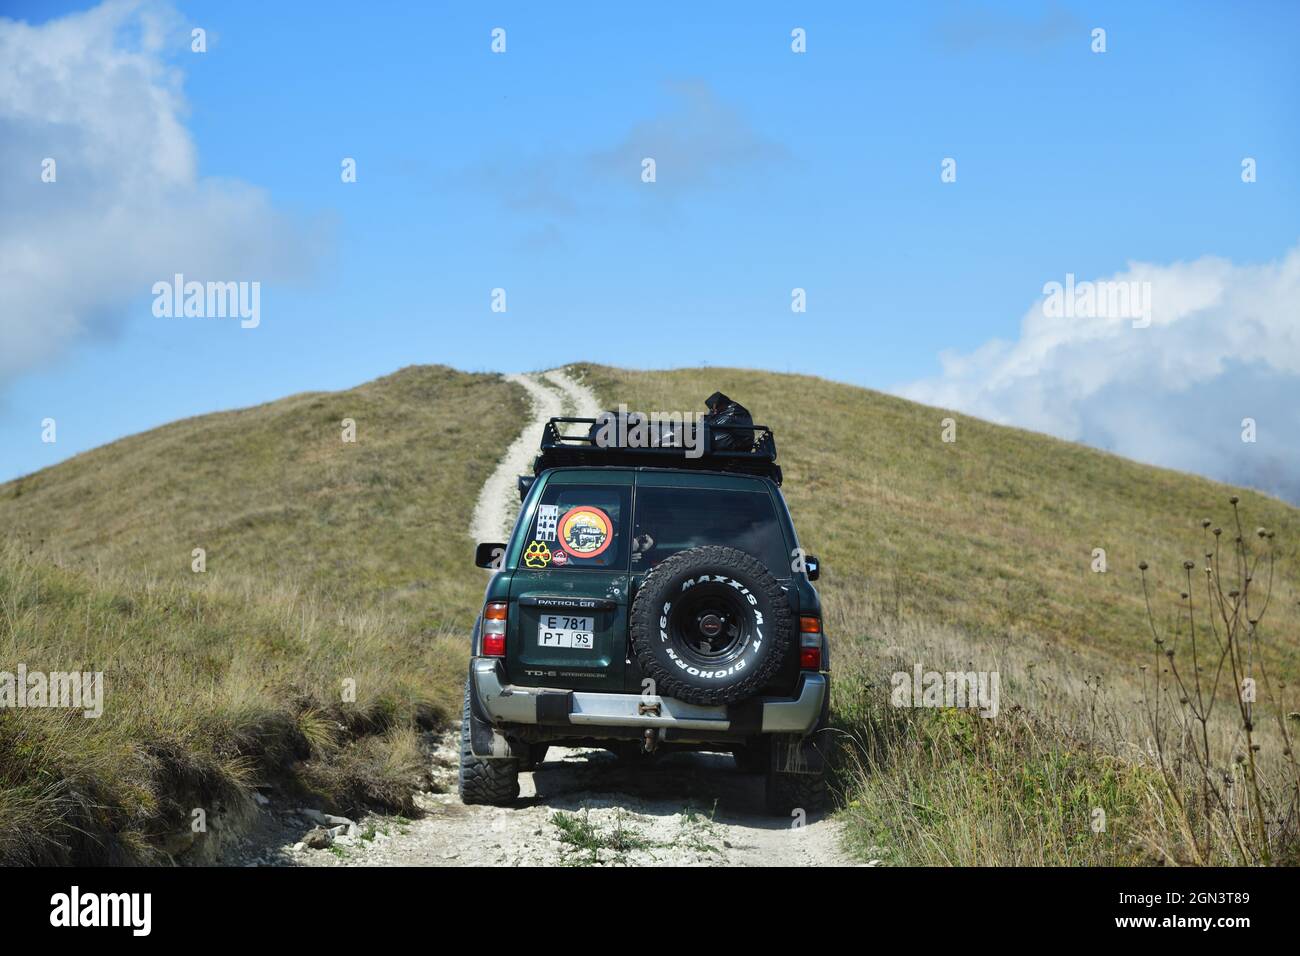 Chechnya, Russia - Sept 12, 2021: Off-road car shown in the Caucasus mountains landscape. Vedeno district of the Chechen Republic. Extreme mountain sa Stock Photo